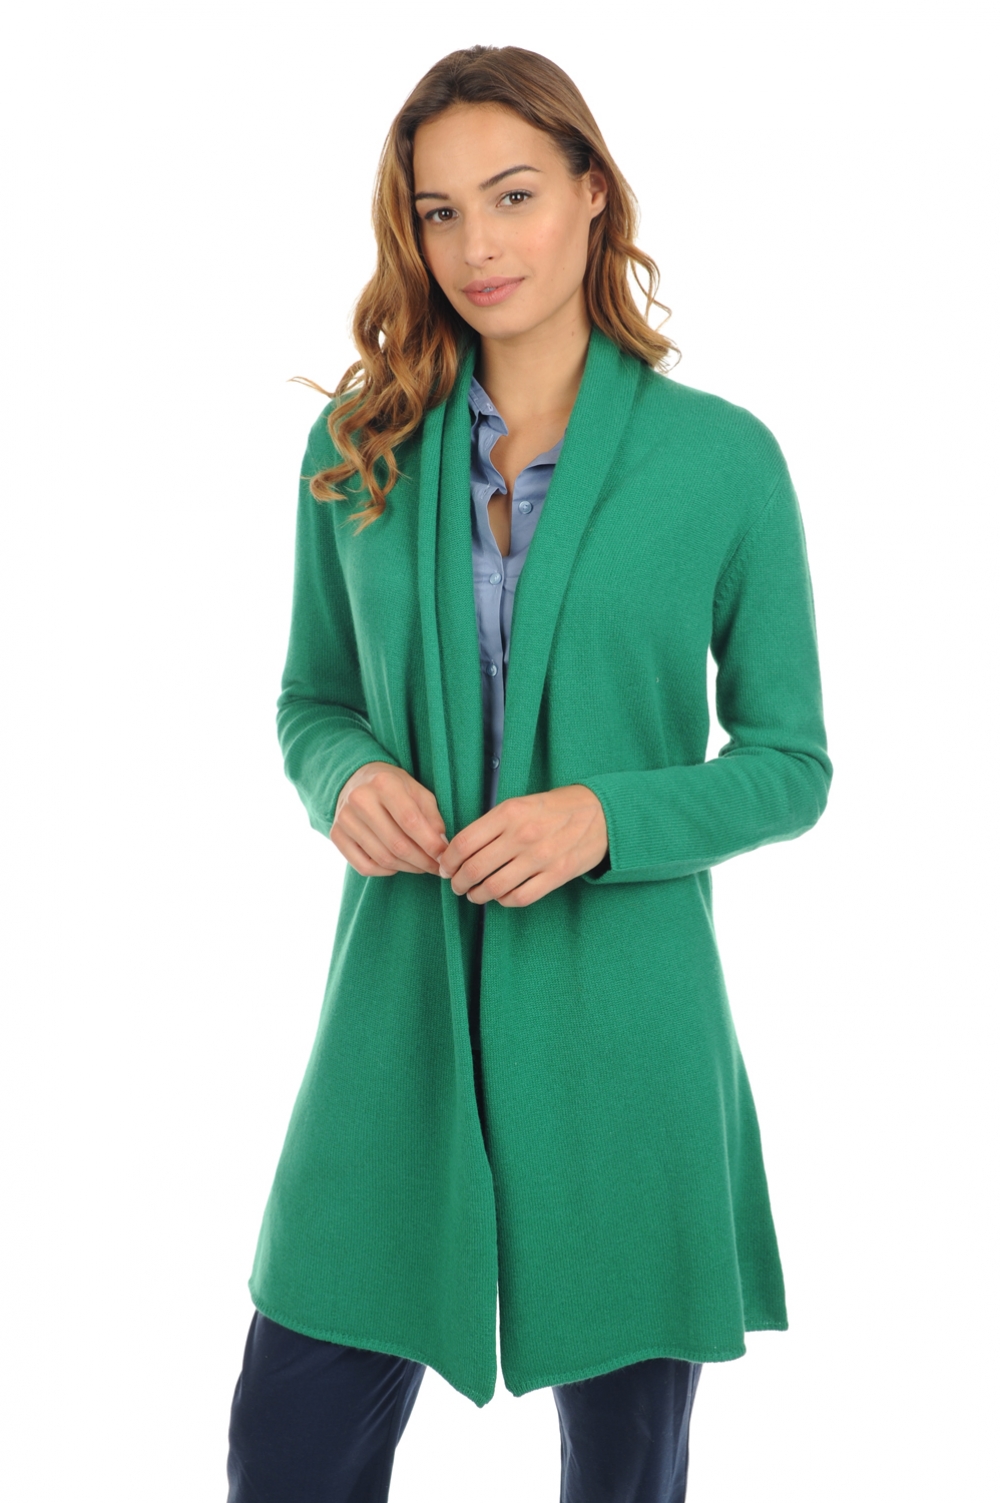 Cachemire robe manteau femme perla vert anglais s